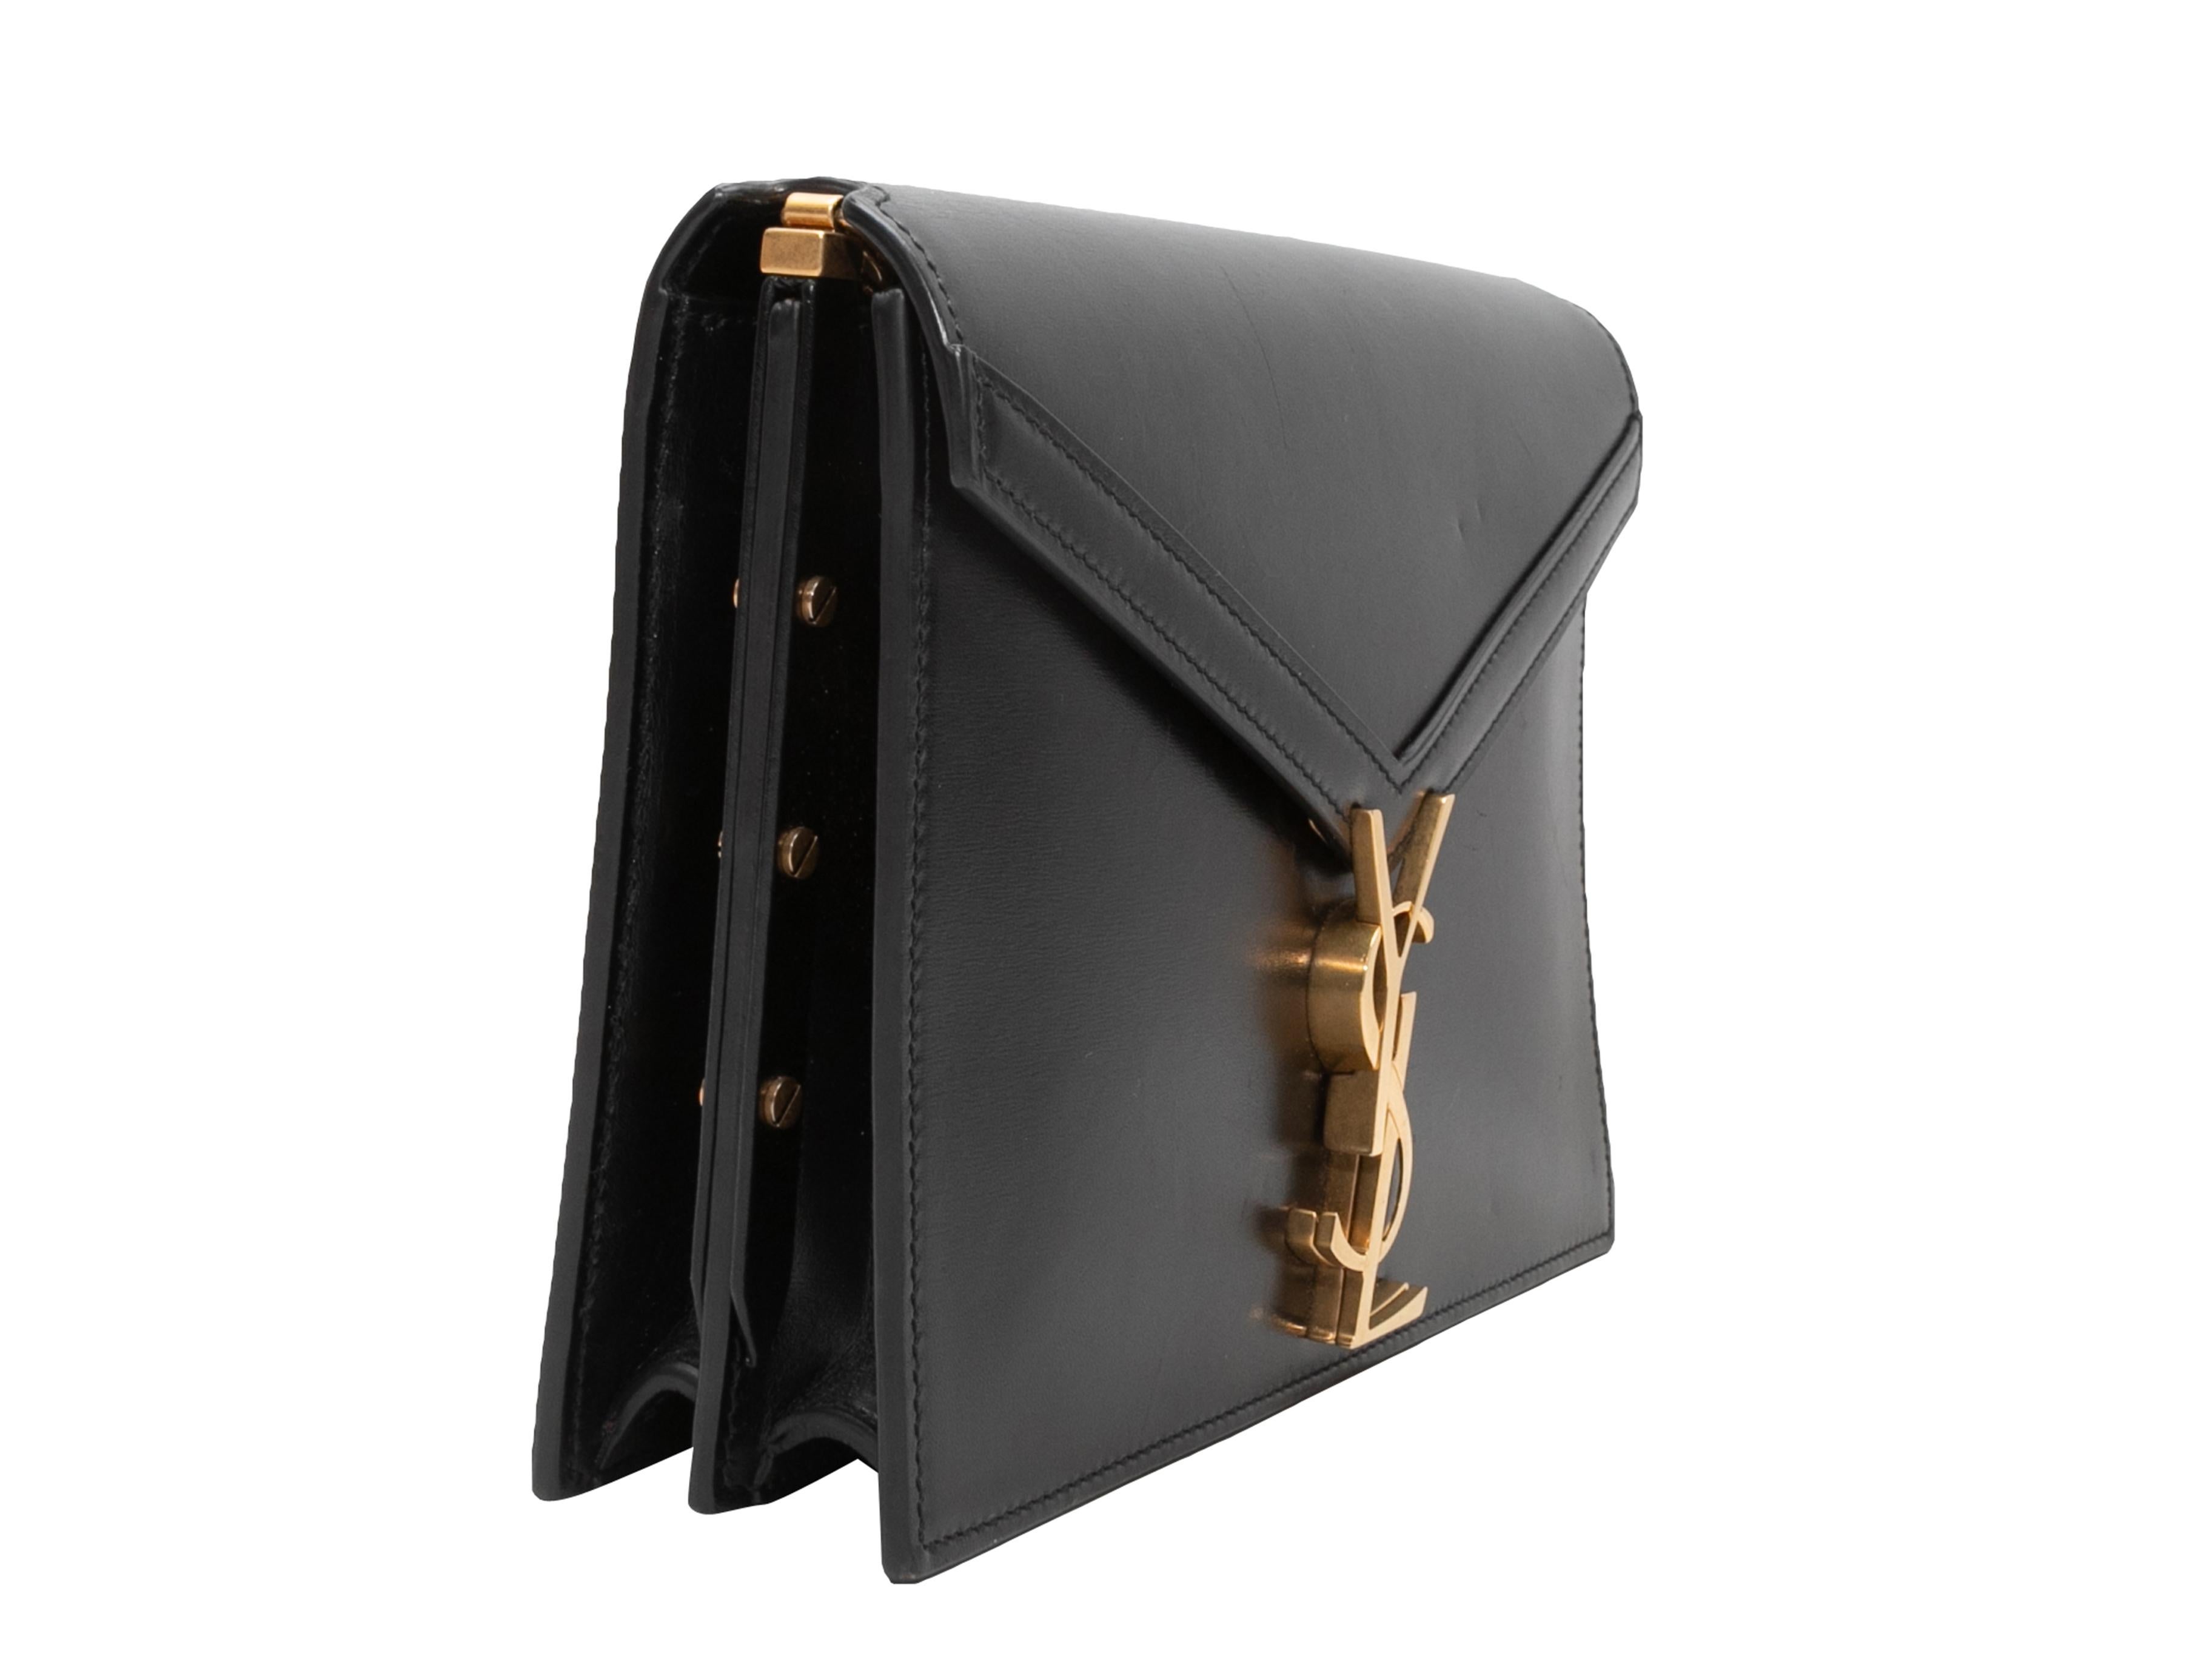 Black Saint Laurent Cassandra Medium Chain Bag. The Cassandra Medium Chain Bag features a leather body, gold-tone hardware, chain-link strap, and a front logo flap closure. 8.5